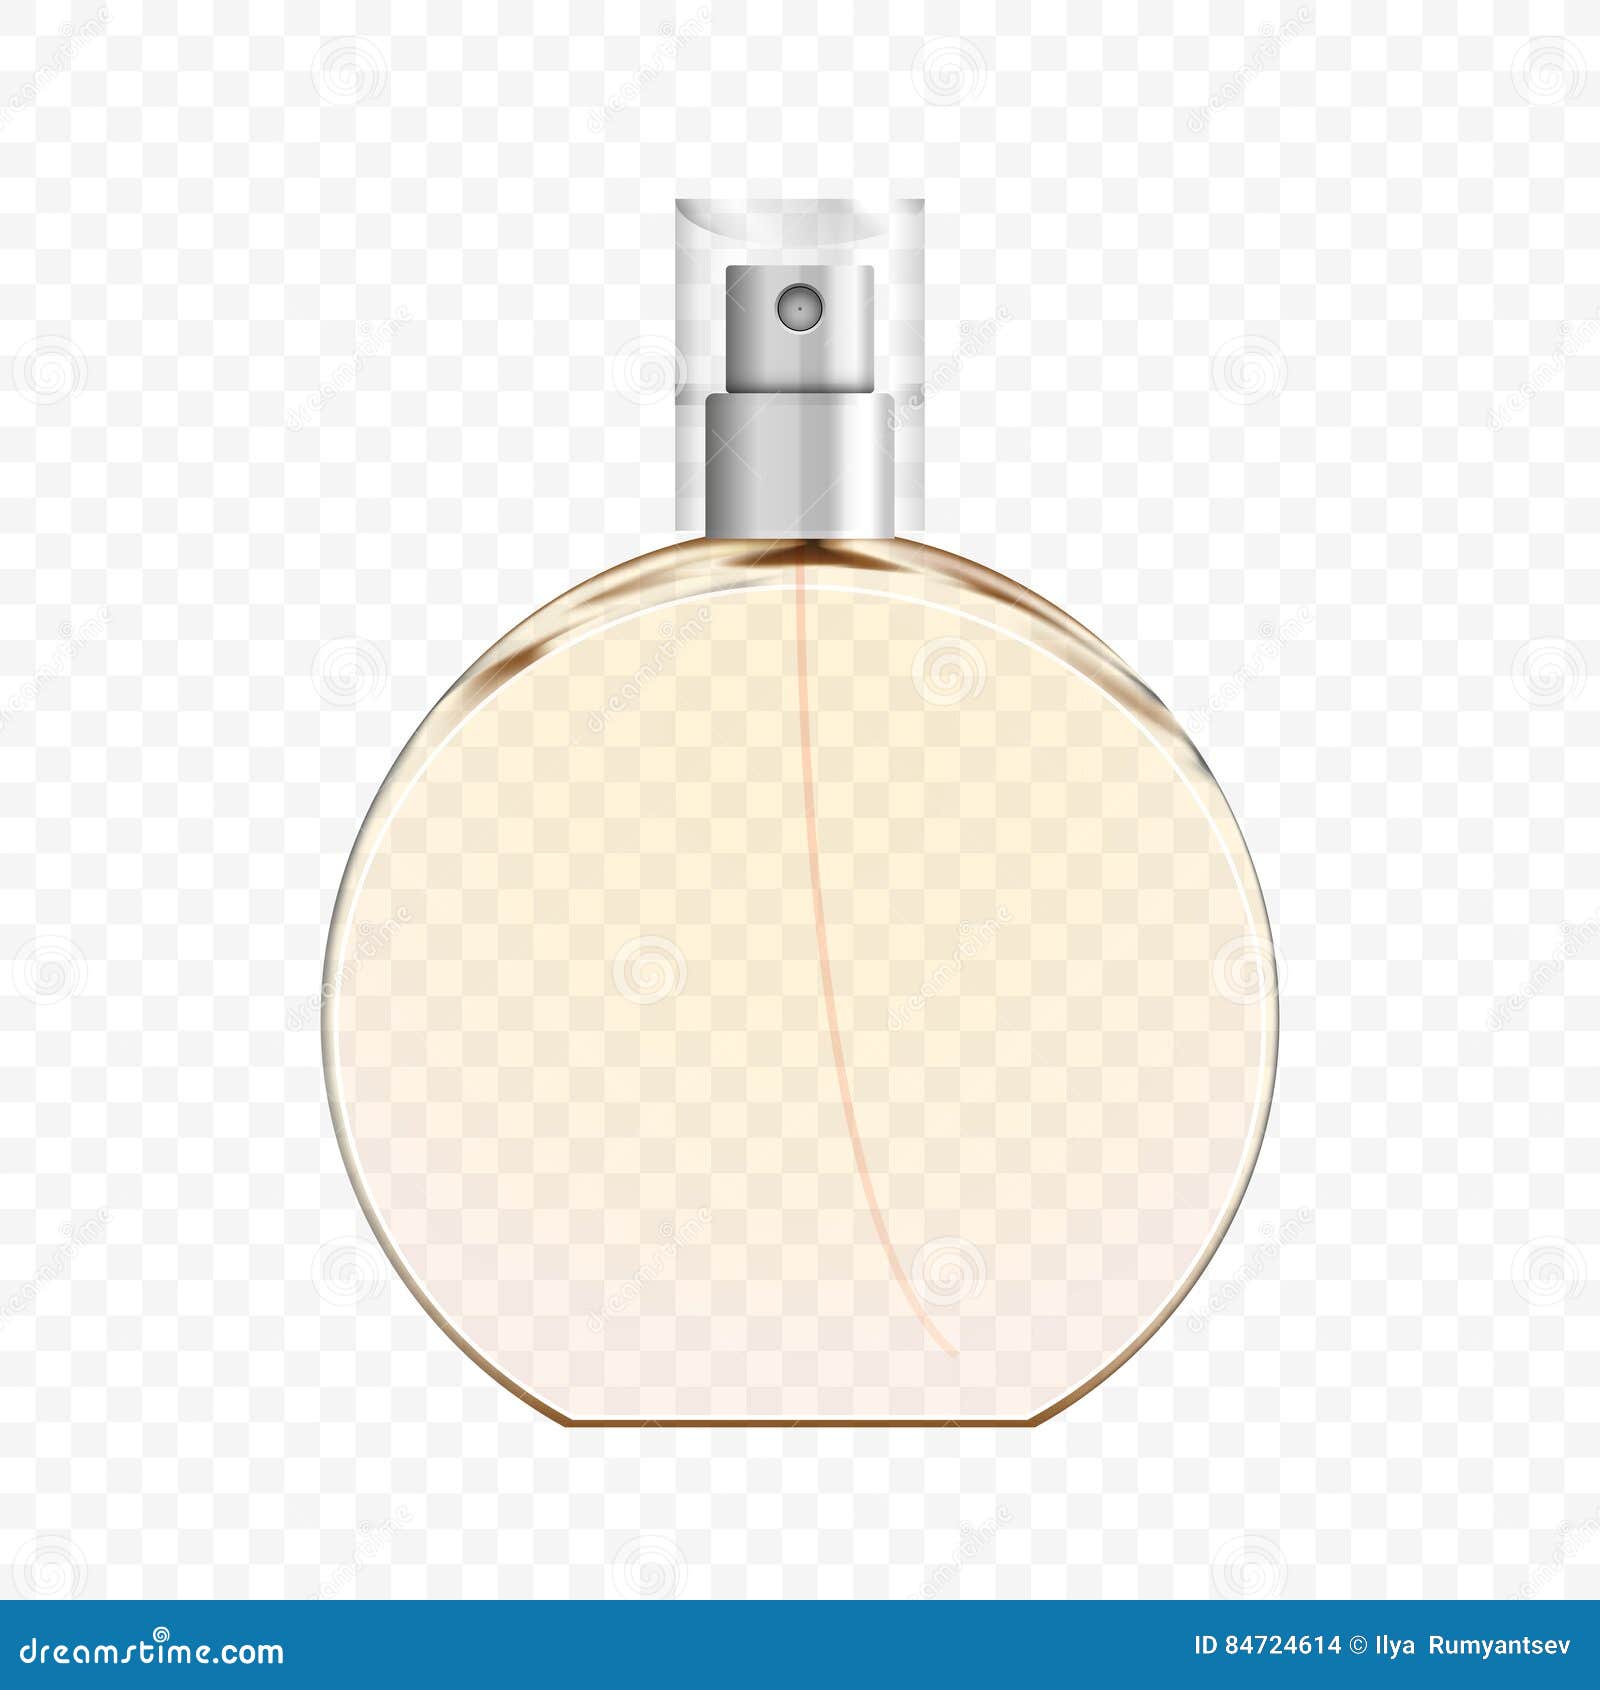 Realistic Transparent Perfume Bottle, Vector Illustration Stock Vector ...